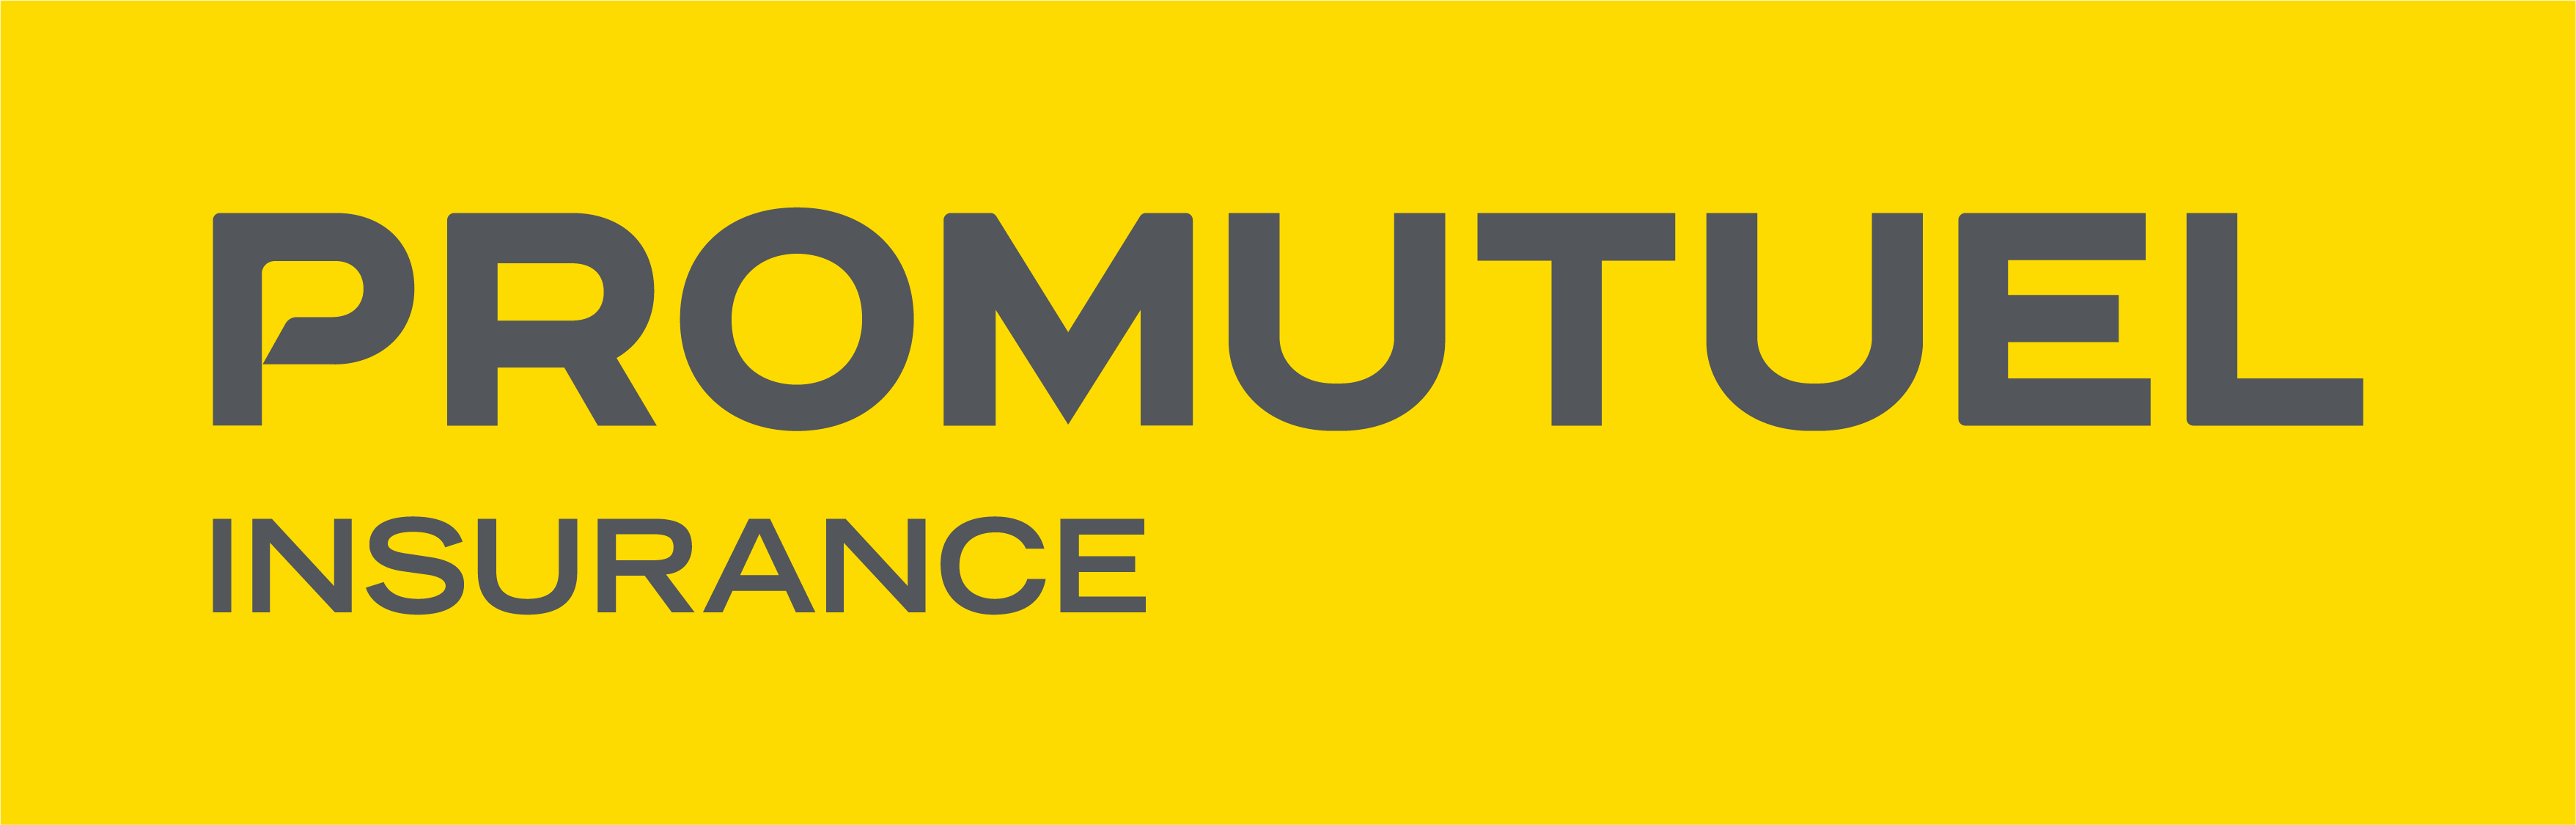 Promutuel-Insurance-logo